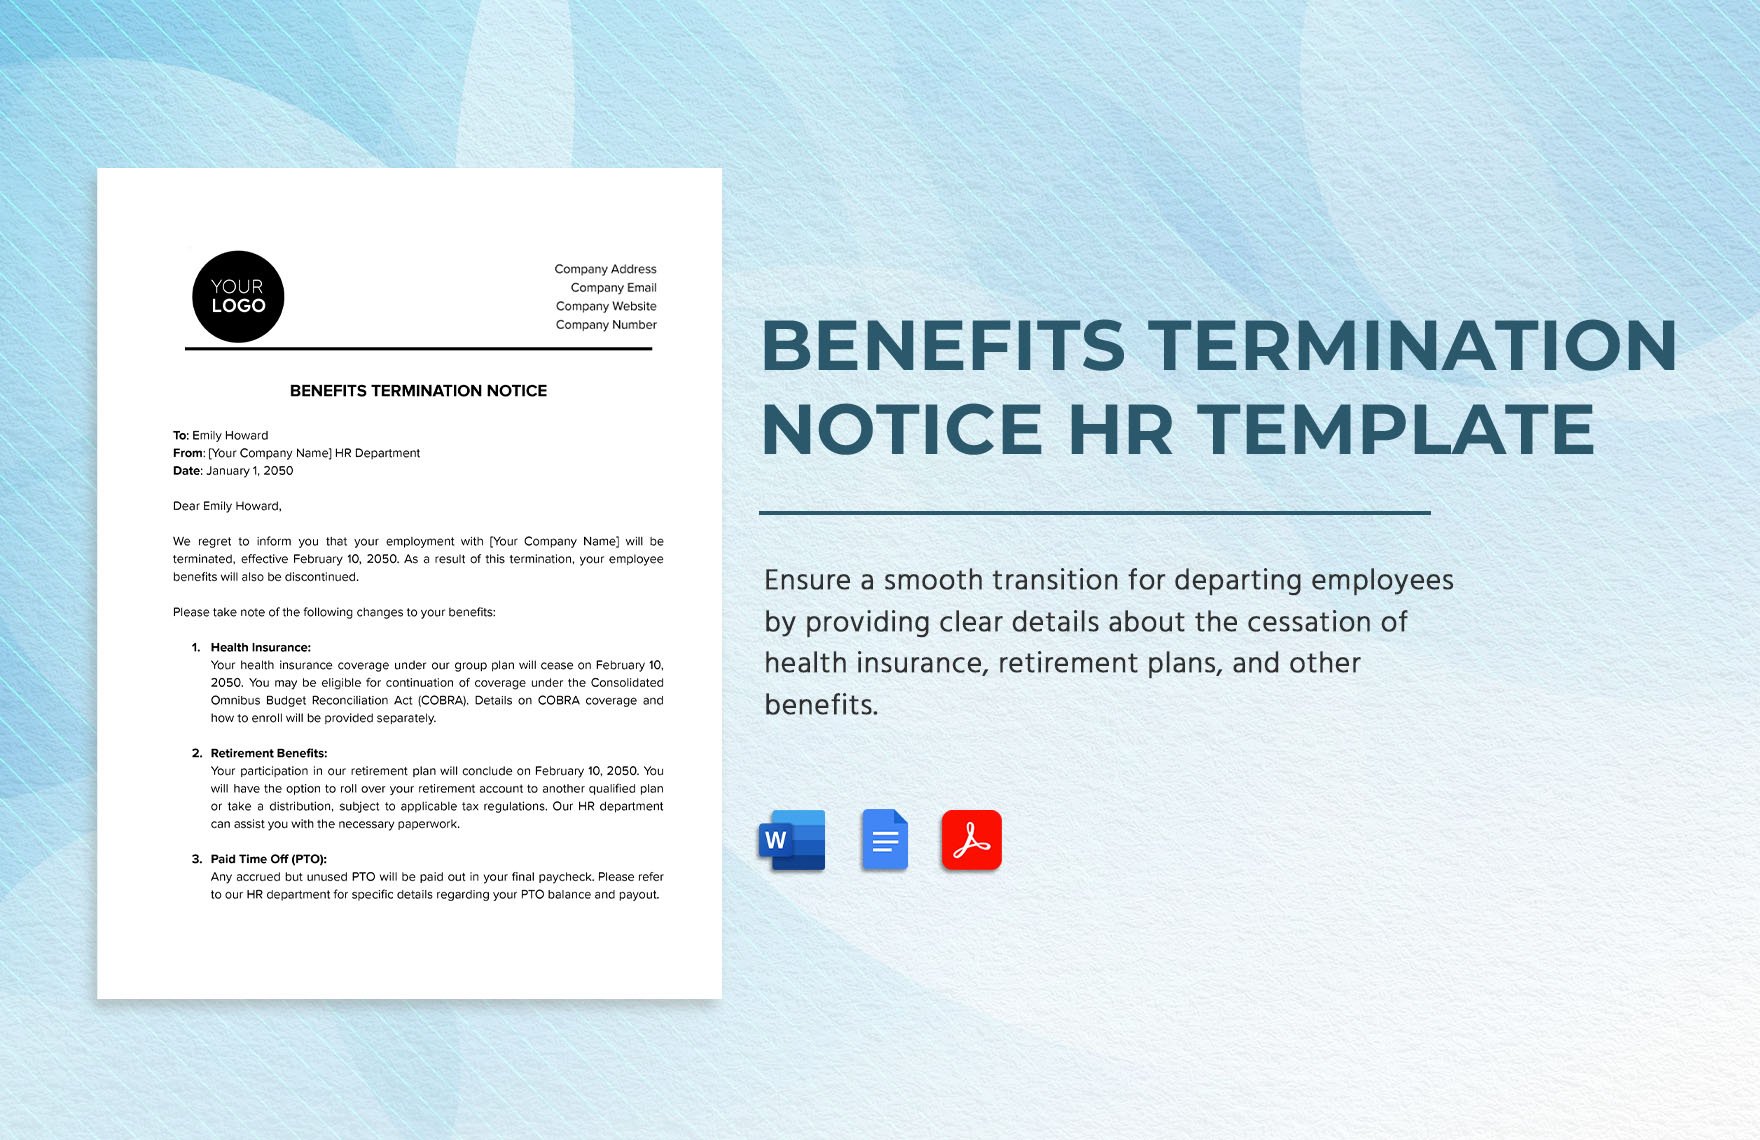 Benefits Termination Notice HR Template